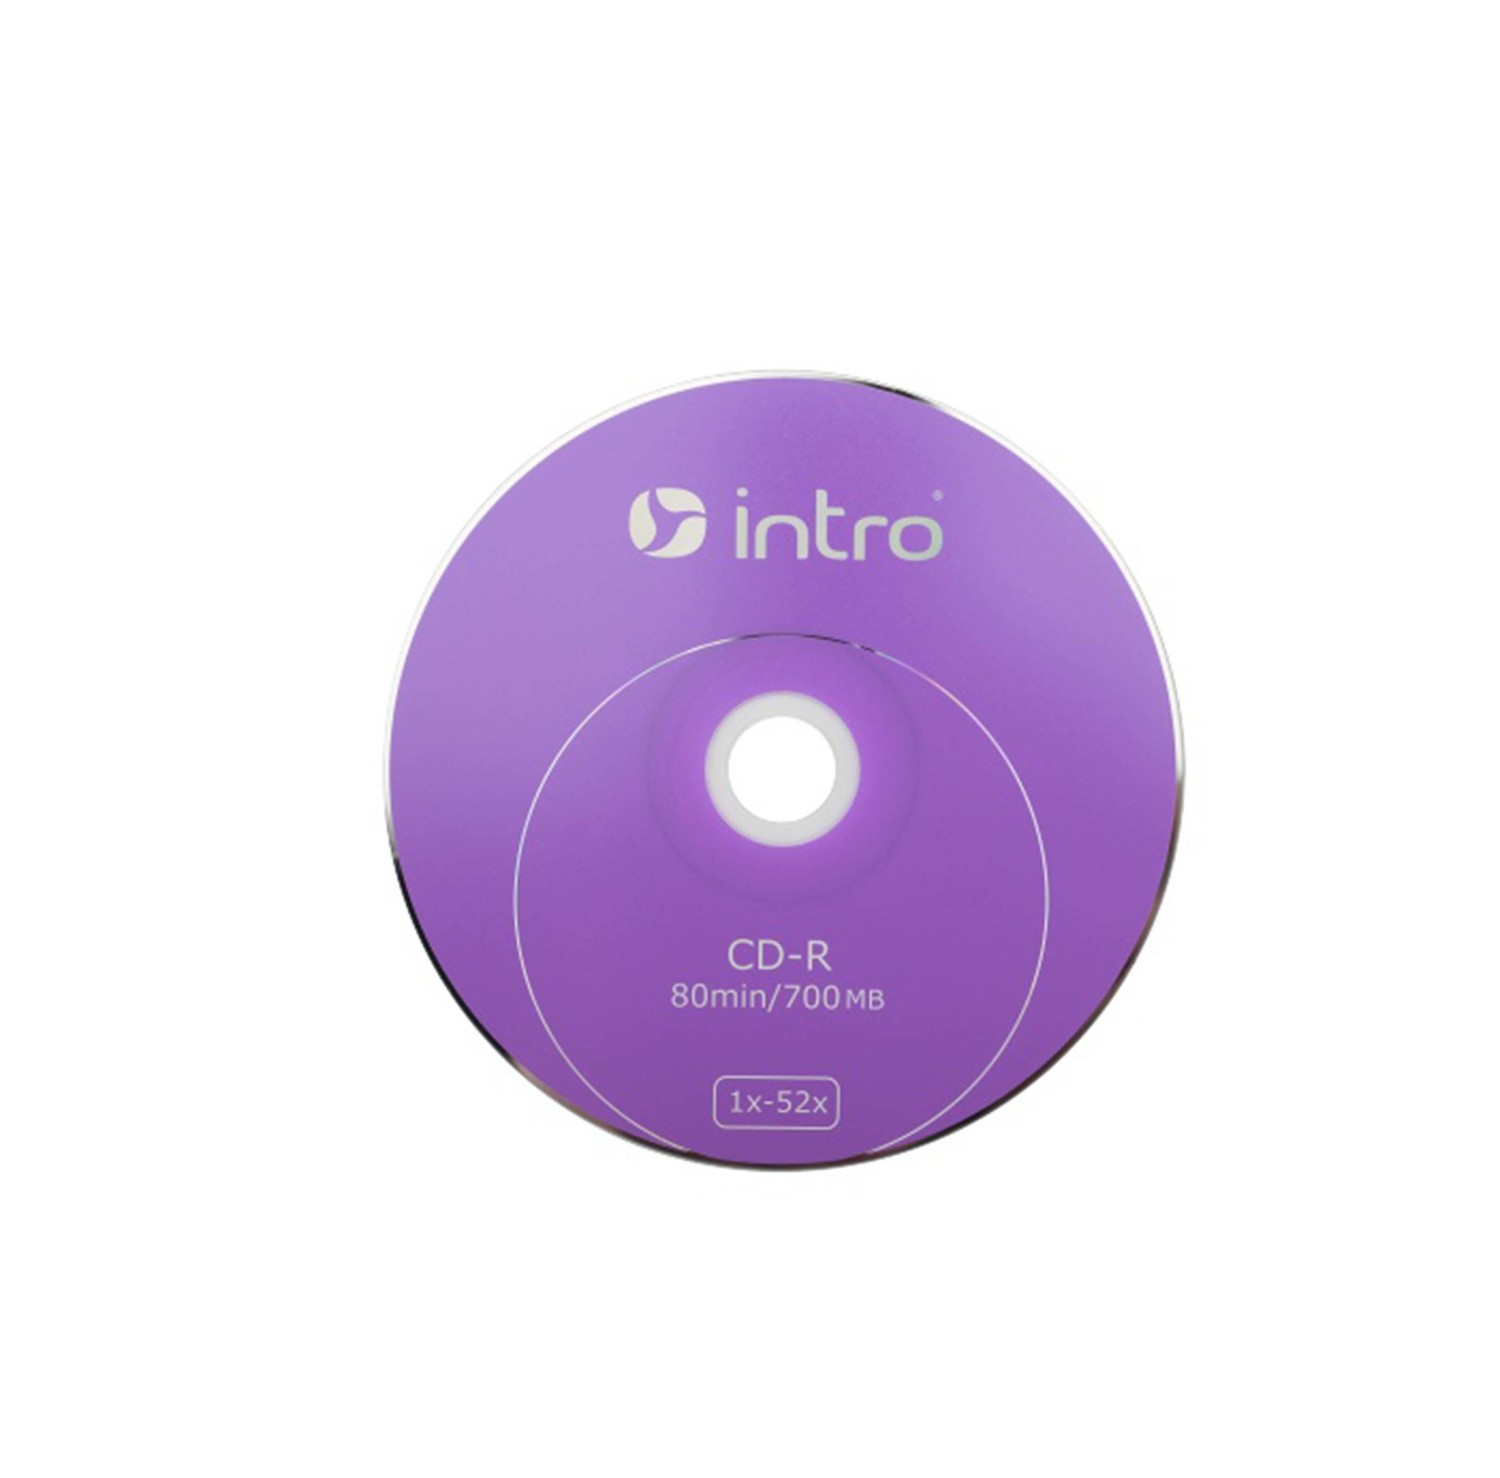 Емкость компакт. Объем CD диска. DVD И CD разница. Компакт диск объемом 210 МБ. Емкость CD диска фото.